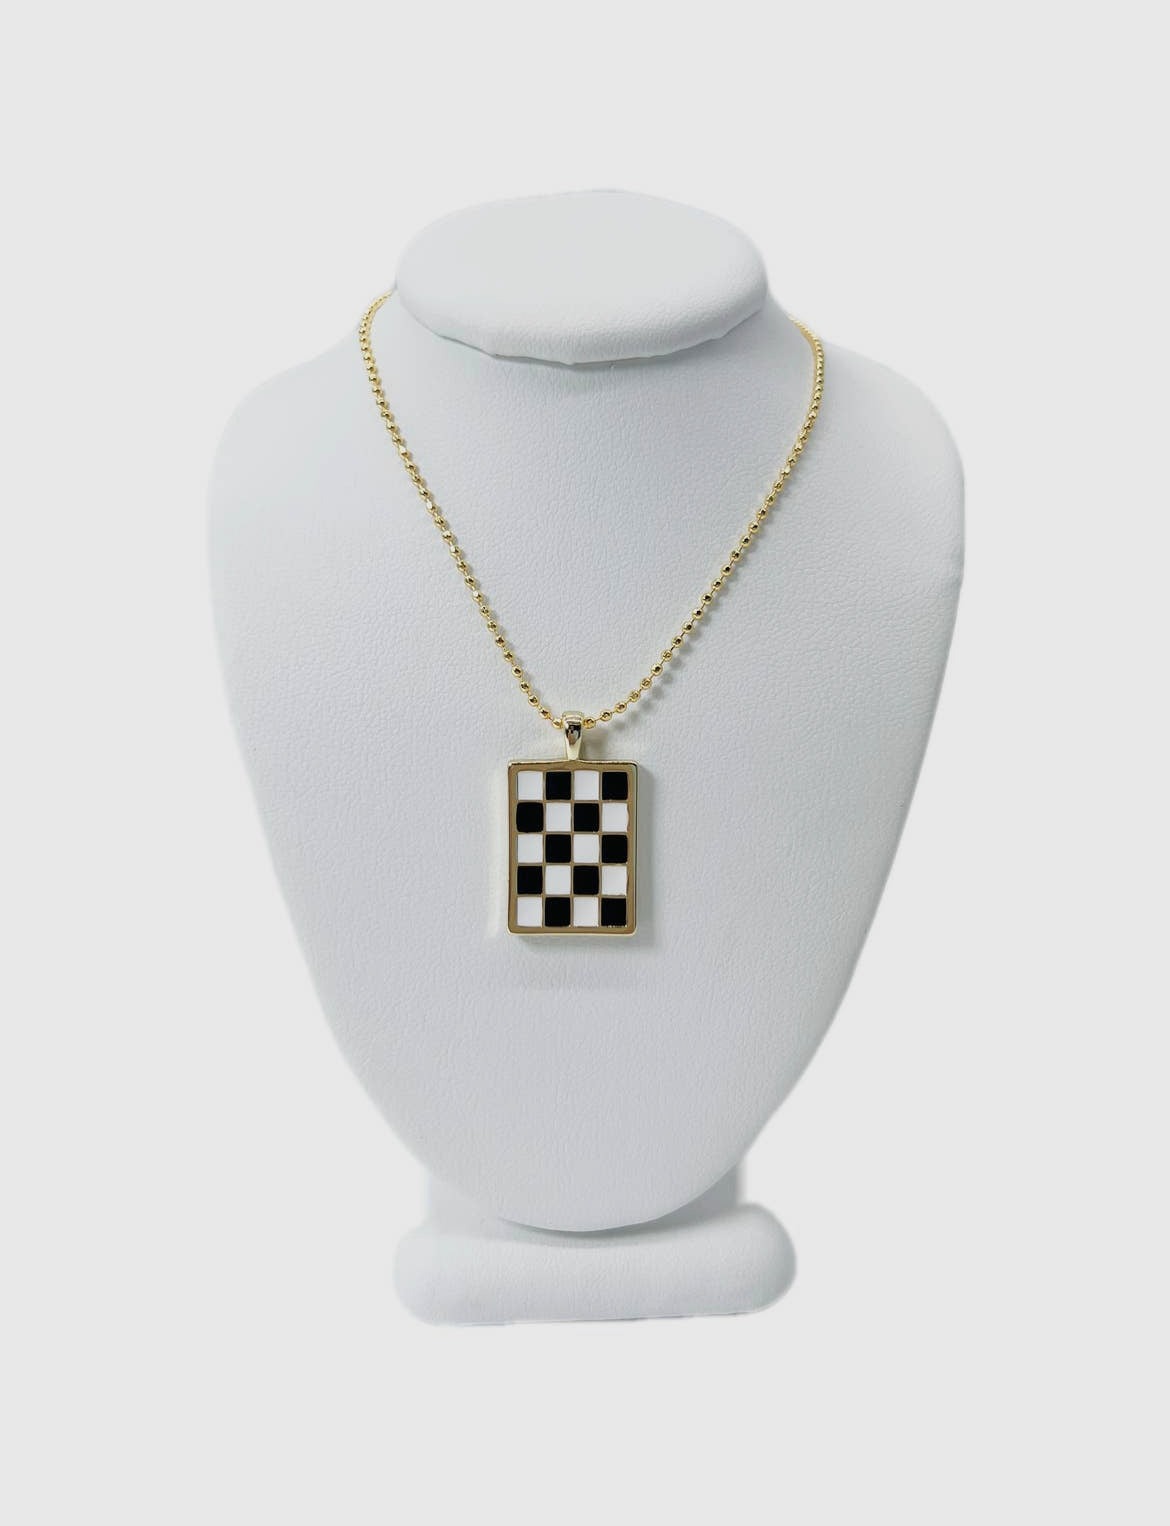 Black & White Checkered Necklace